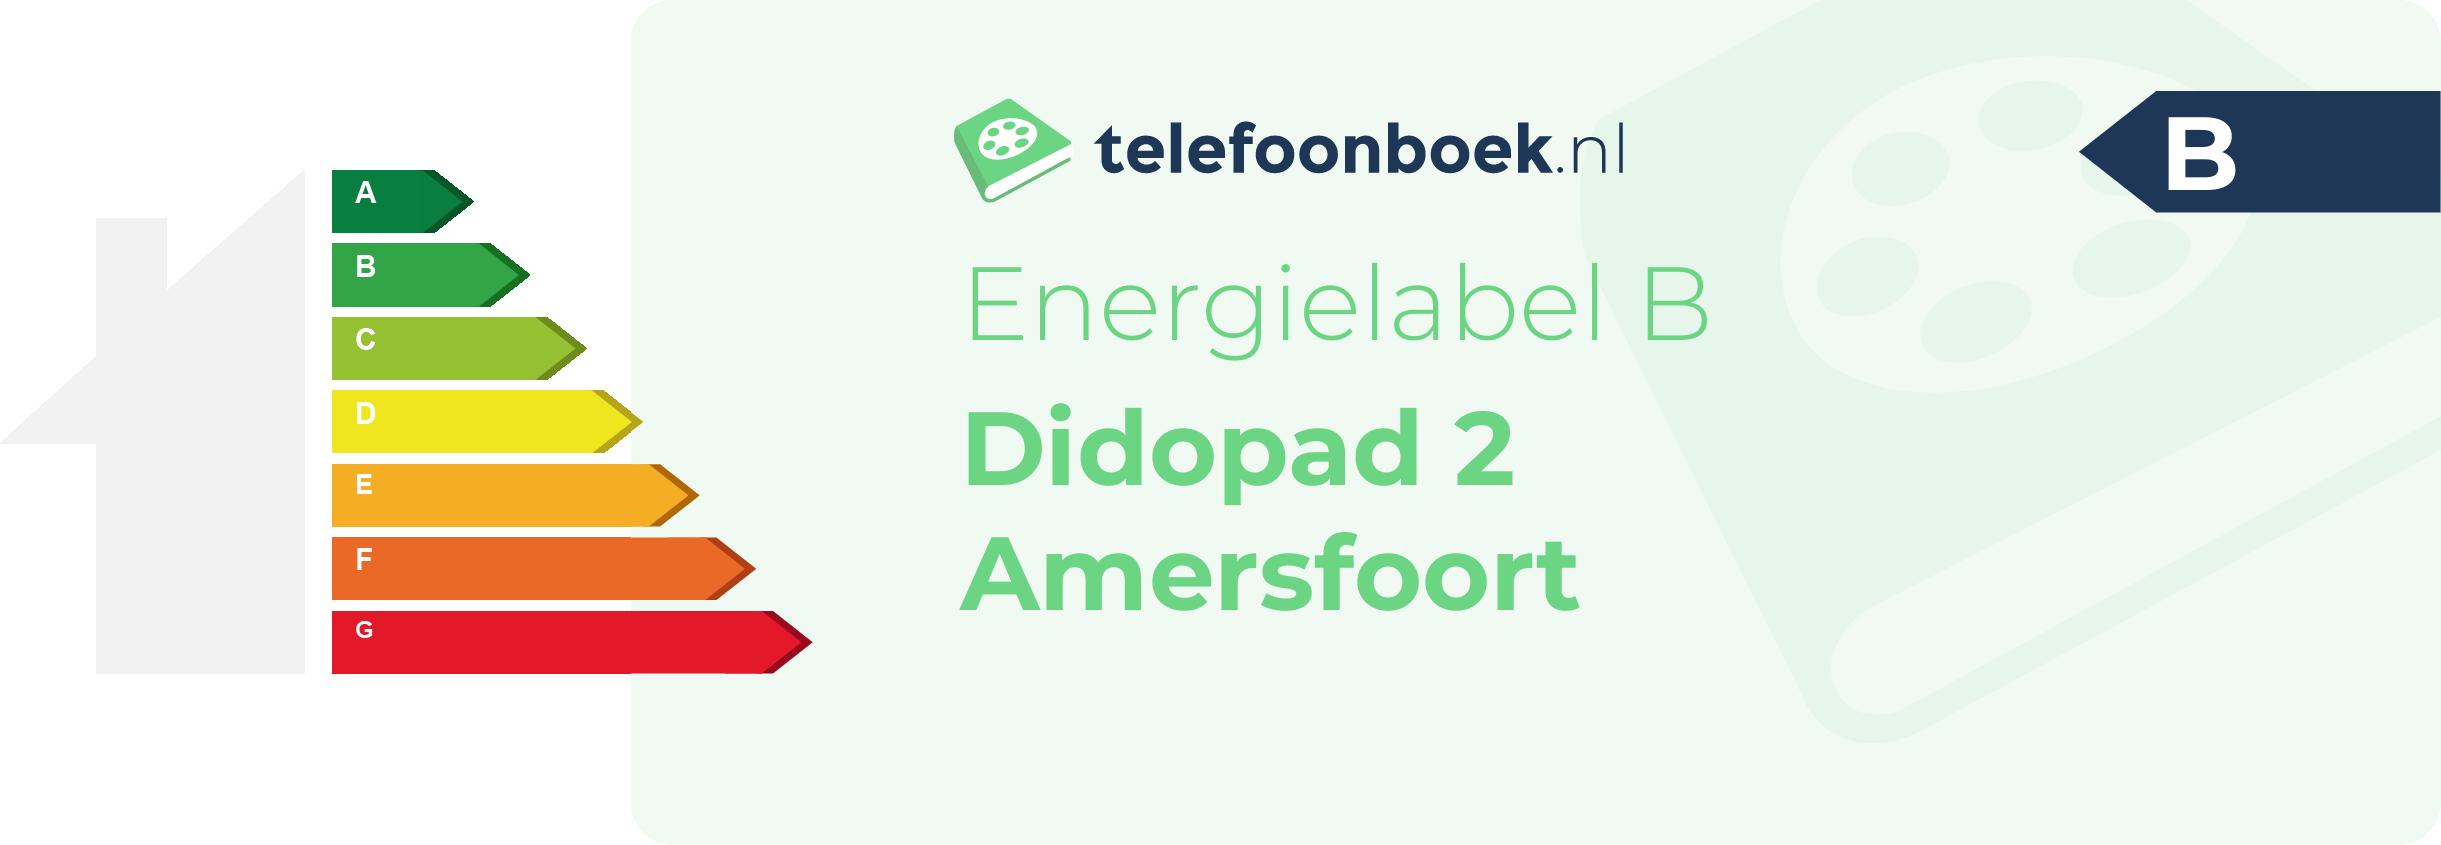 Energielabel Didopad 2 Amersfoort